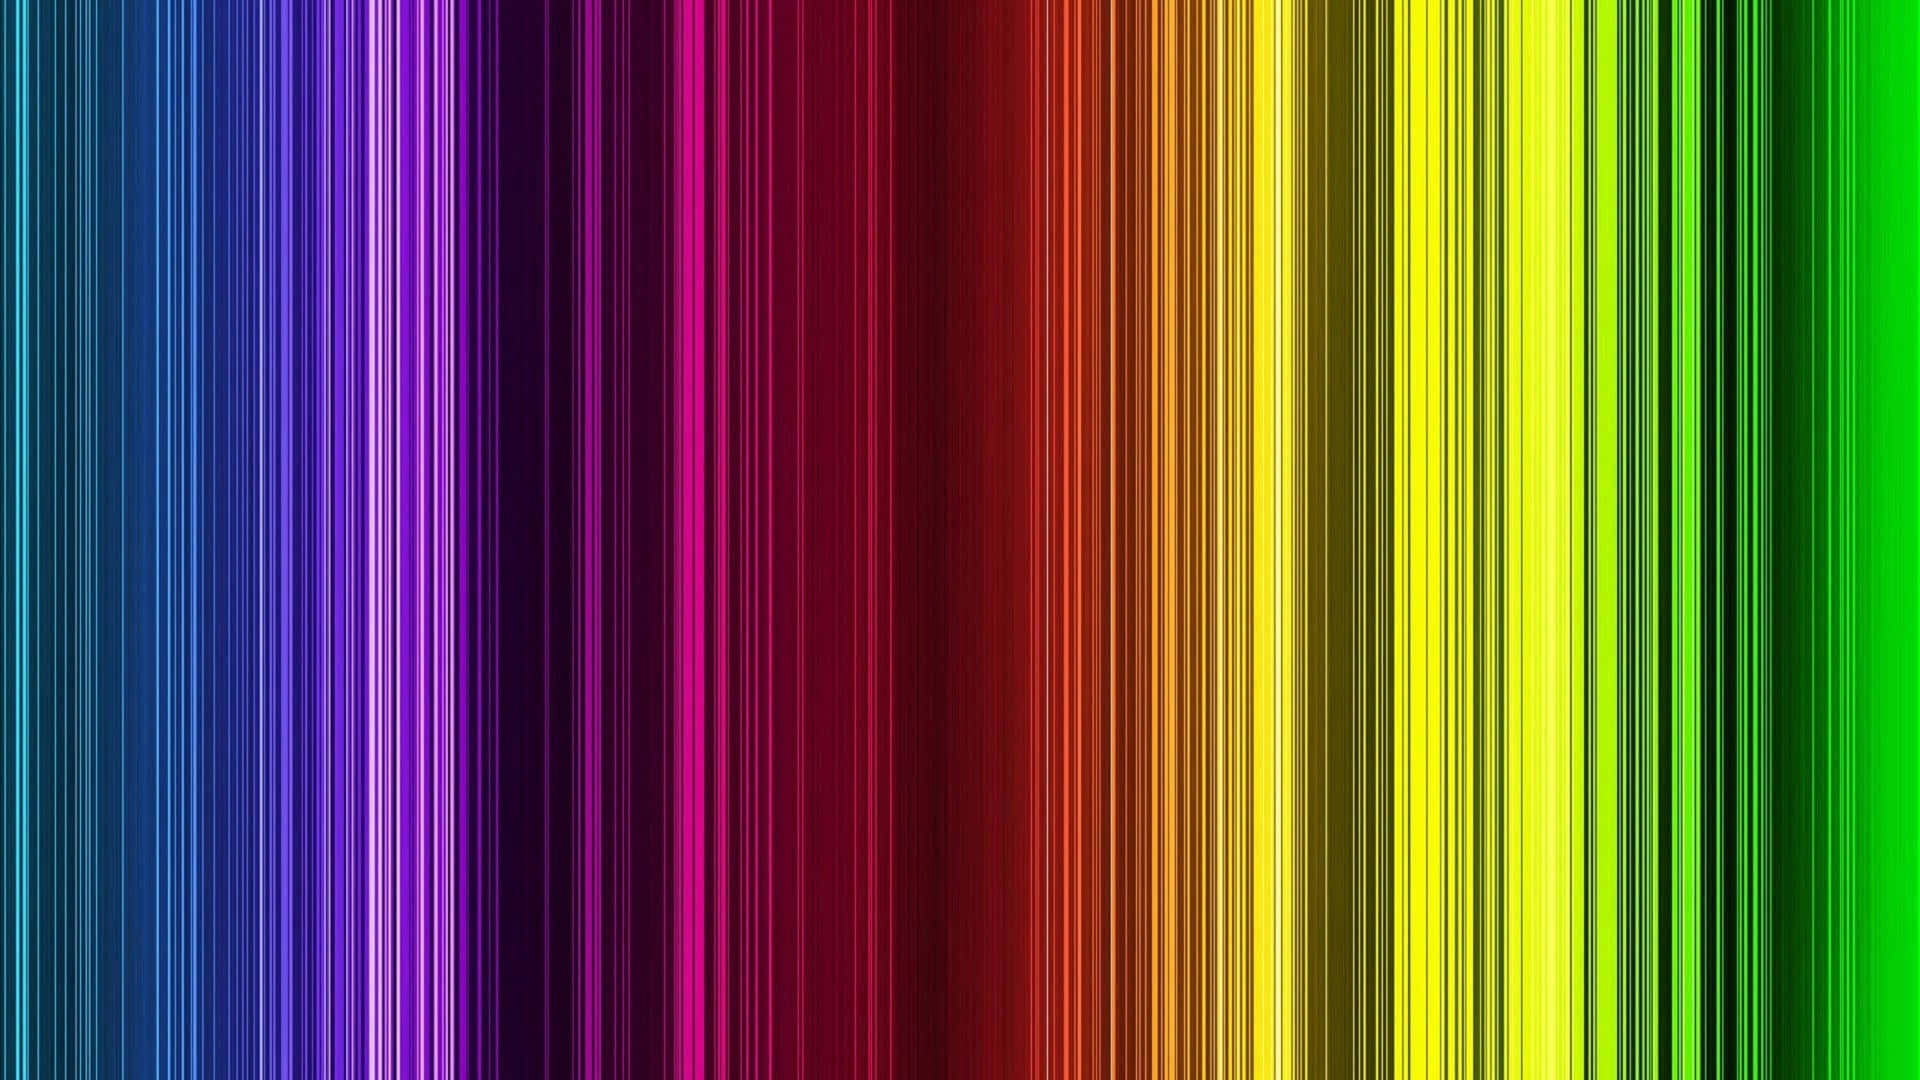 Vibrant Color Spectrum Gradient.jpg Wallpaper